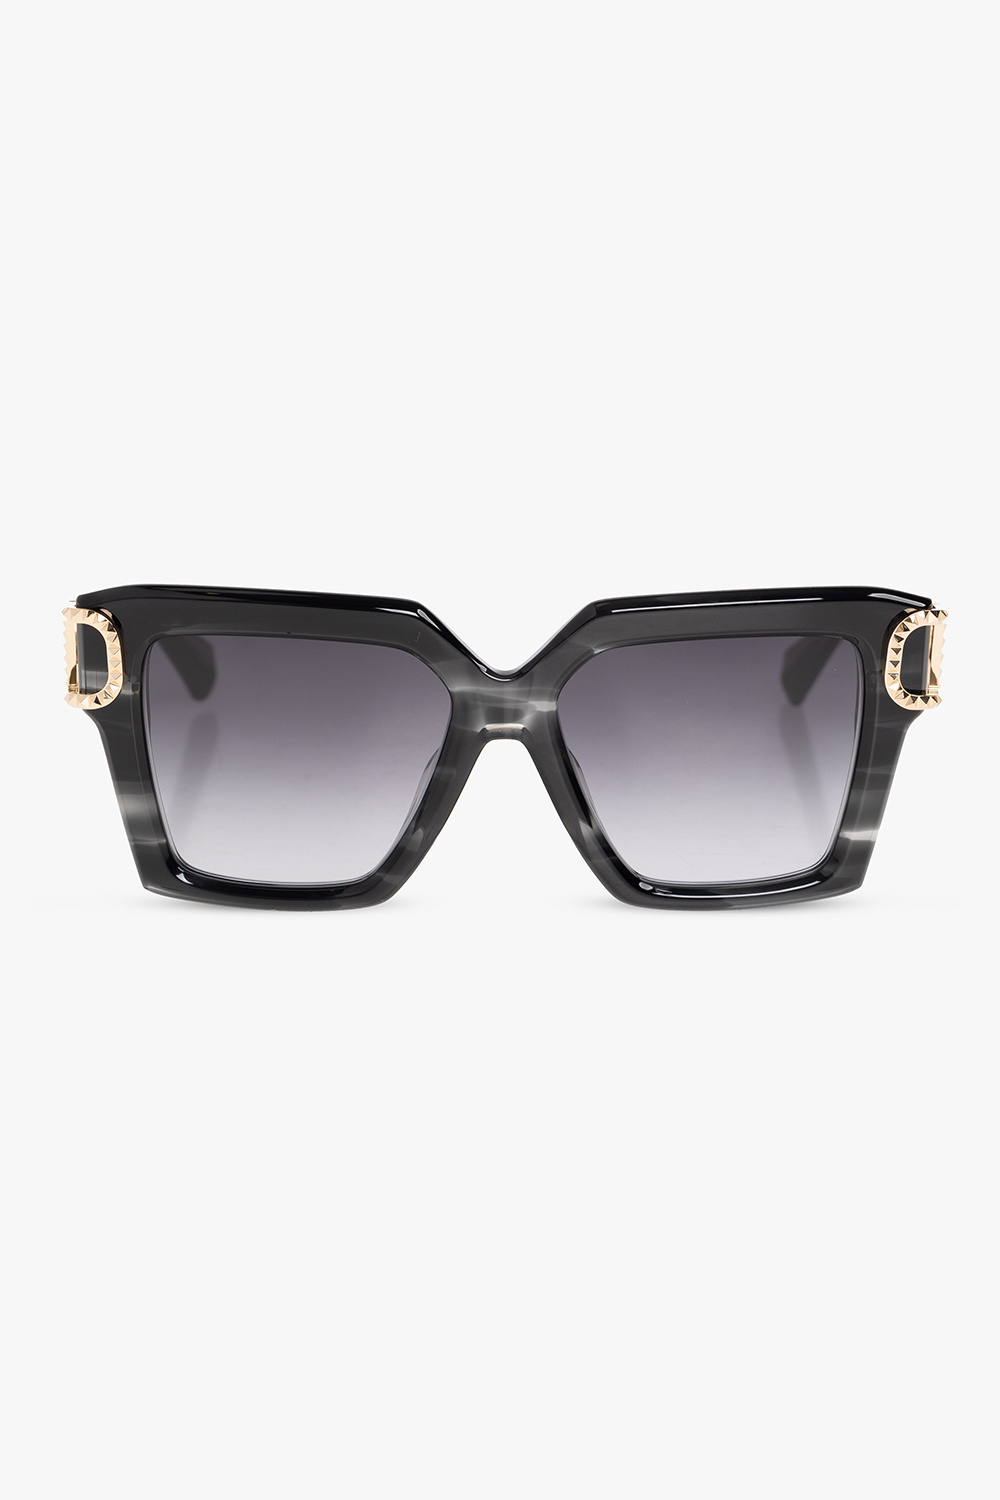 Valentino Eyewear Maui Jim Local Kine Polarized Sunglasses